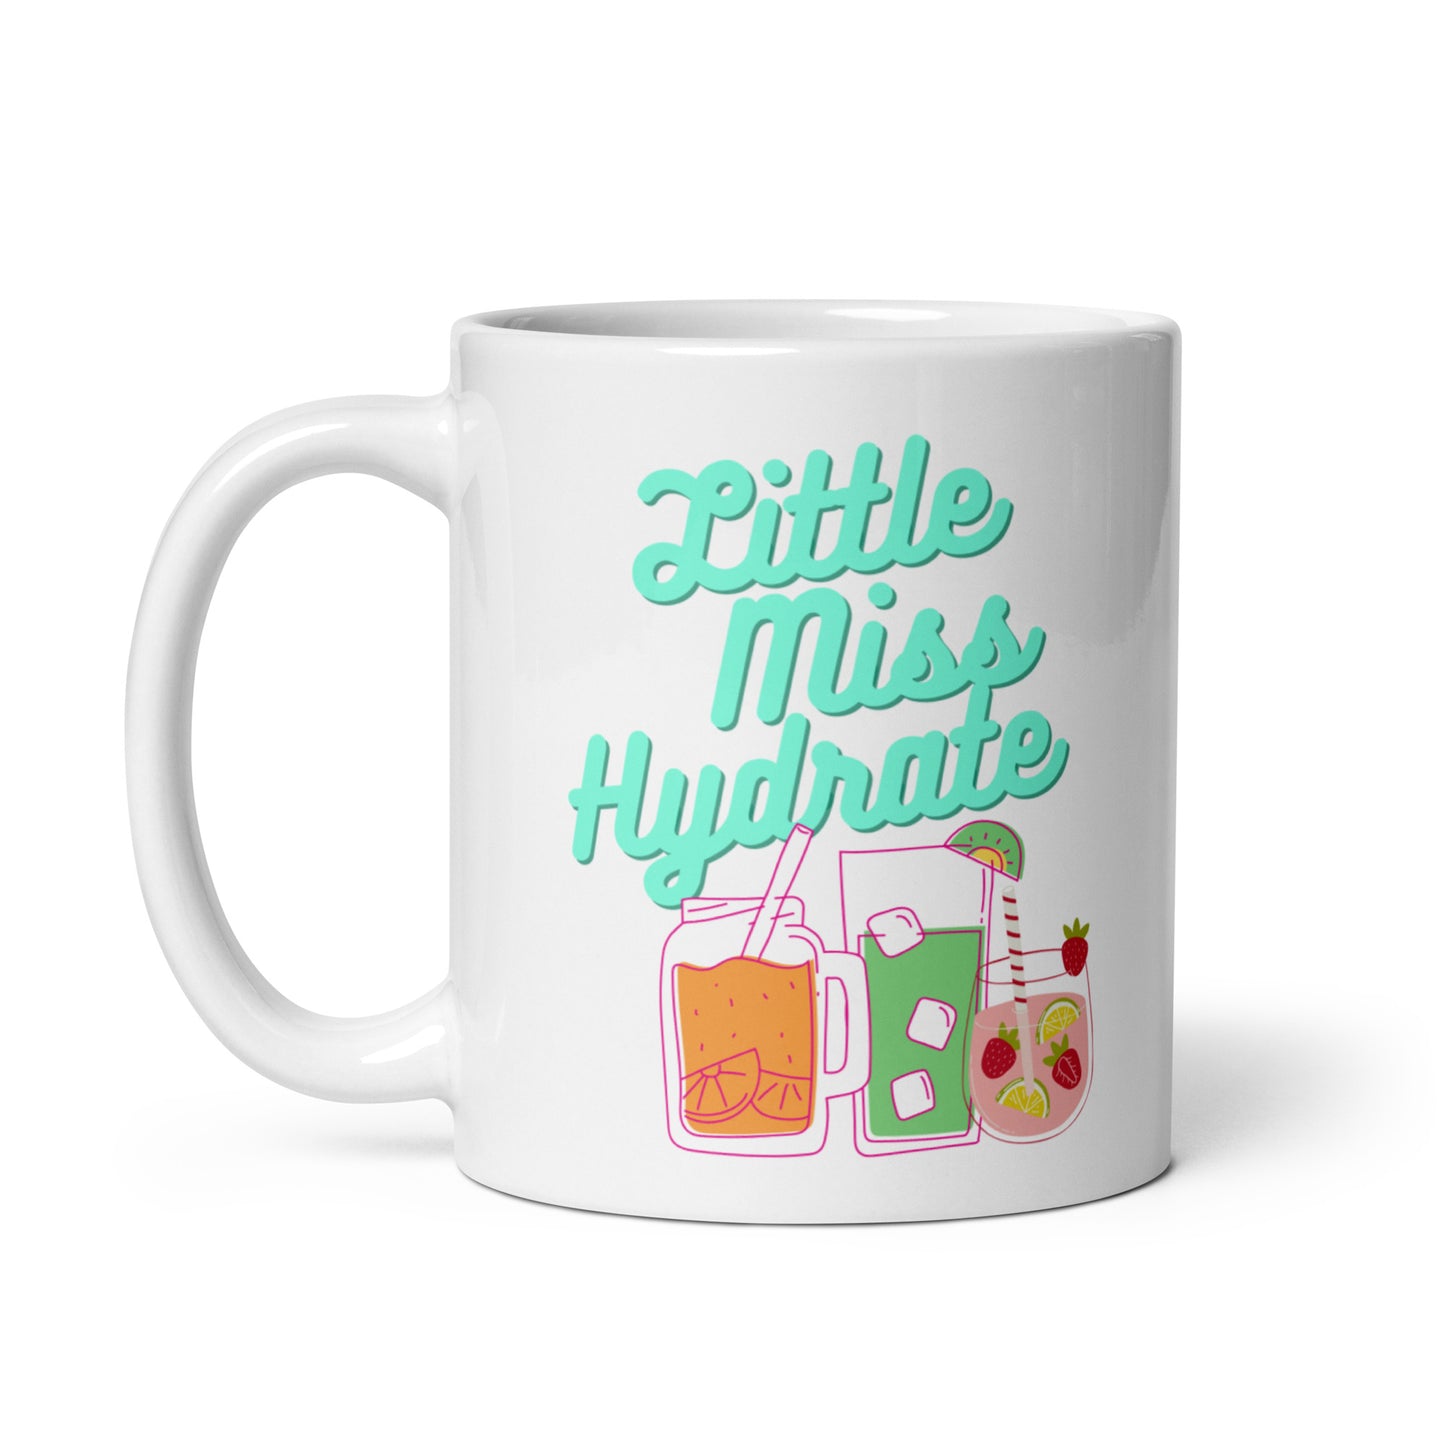 Little Miss White glossy mug